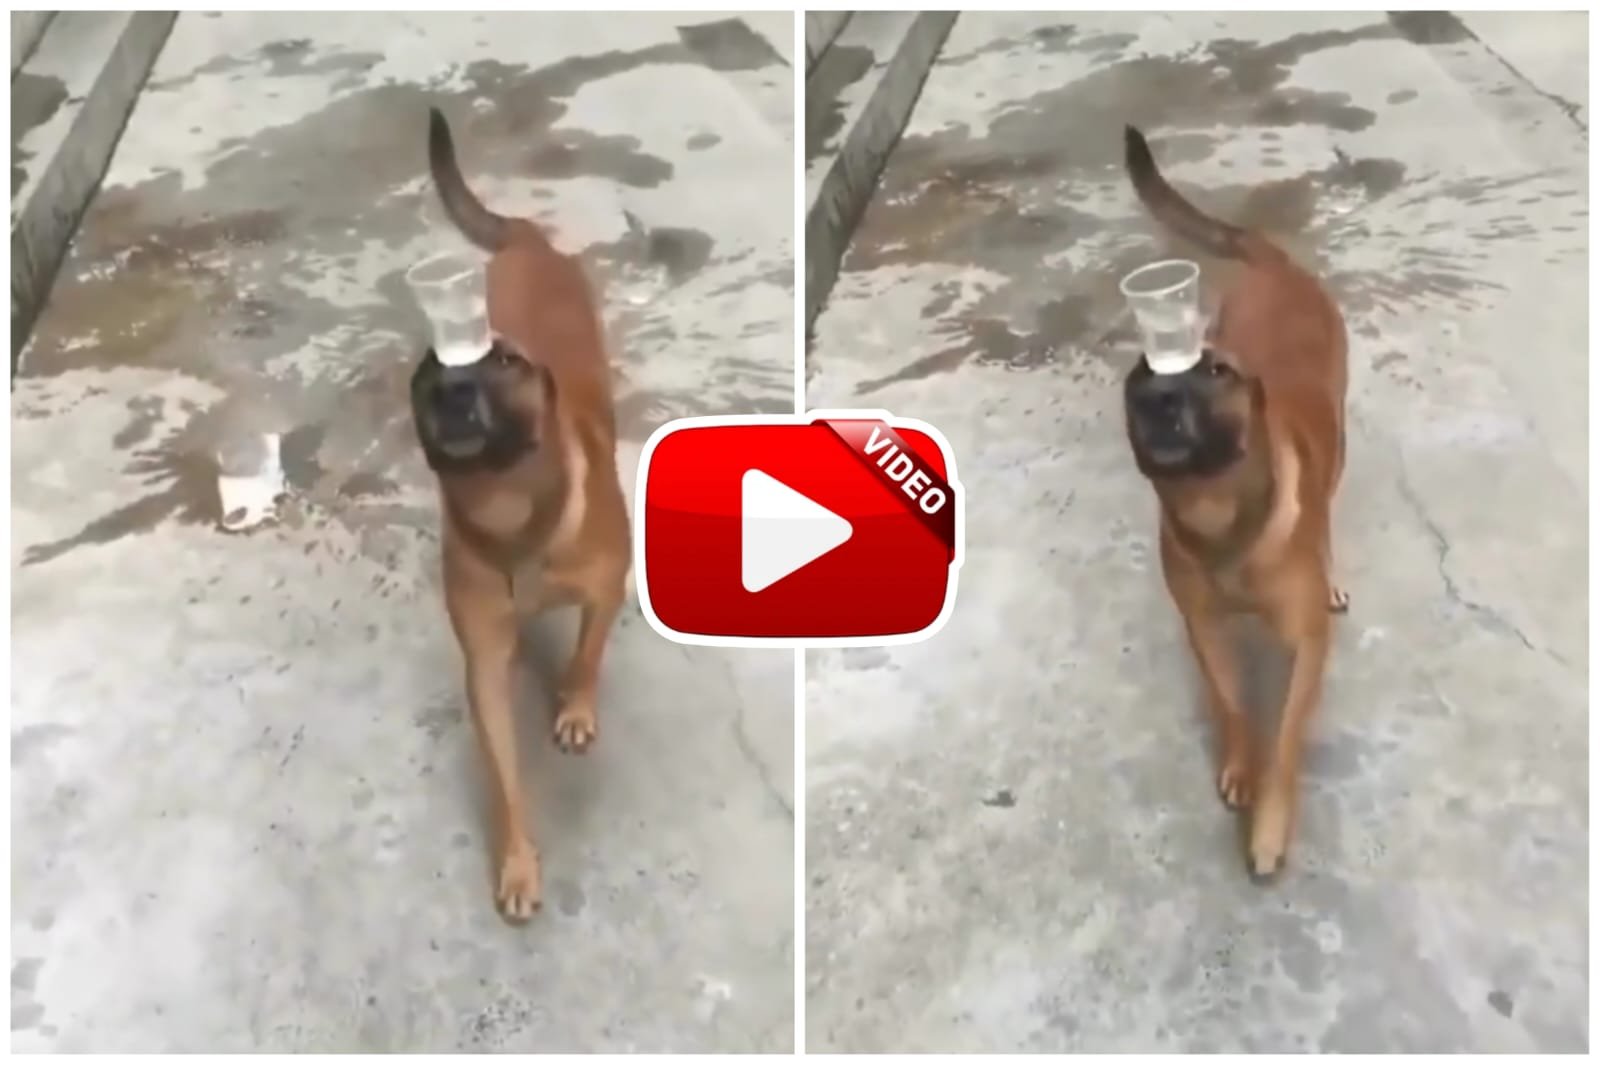 Doggy Ka Video - Dog seen balancing with a glass on his head